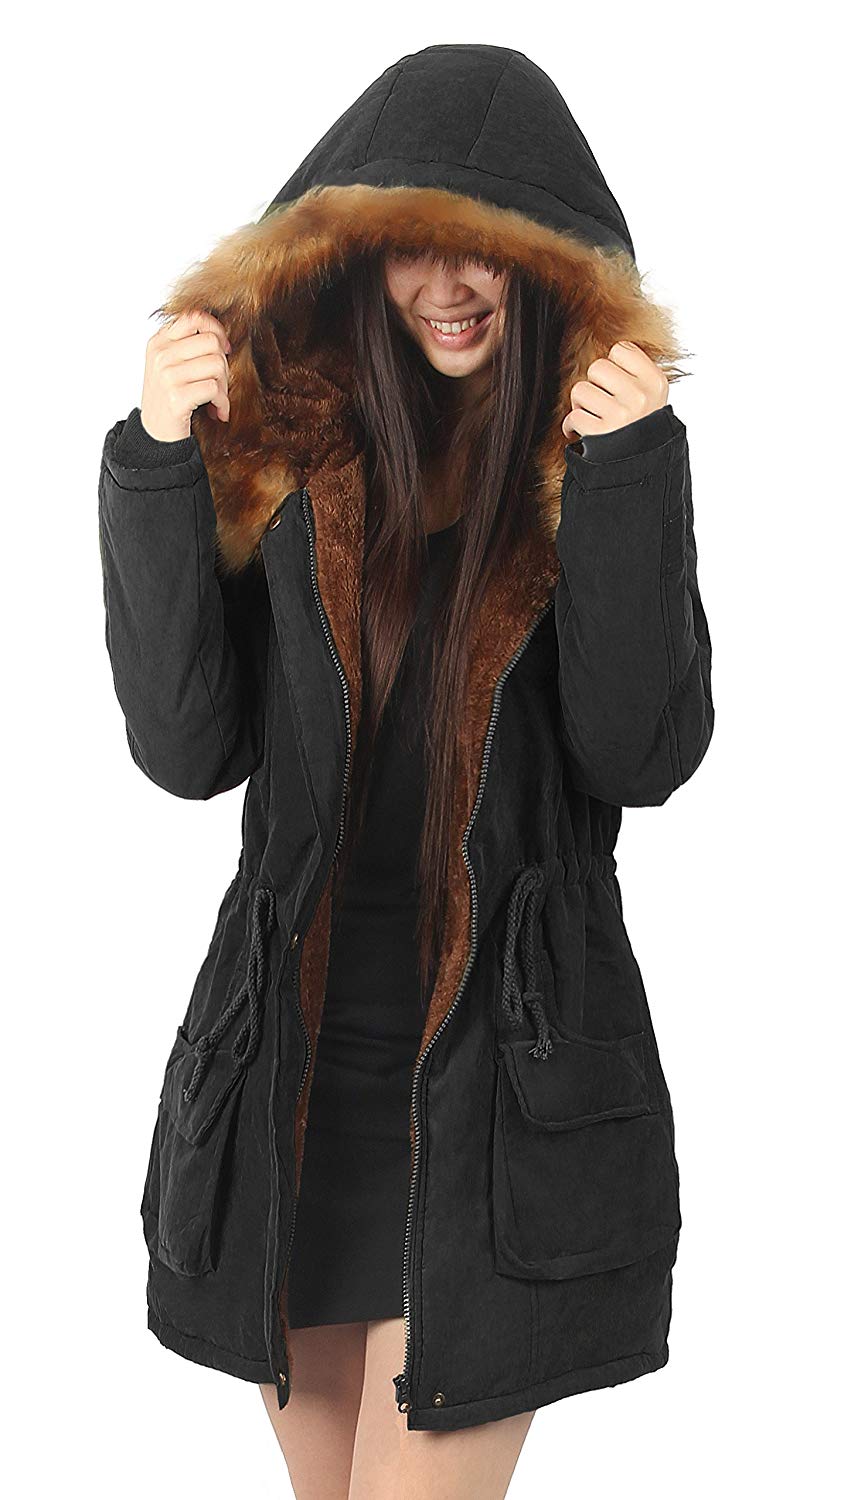 winter coat amazon.com: ilovesia womens hooded warm coats parkas with faux fur jackets:  clothing ETPKLOY